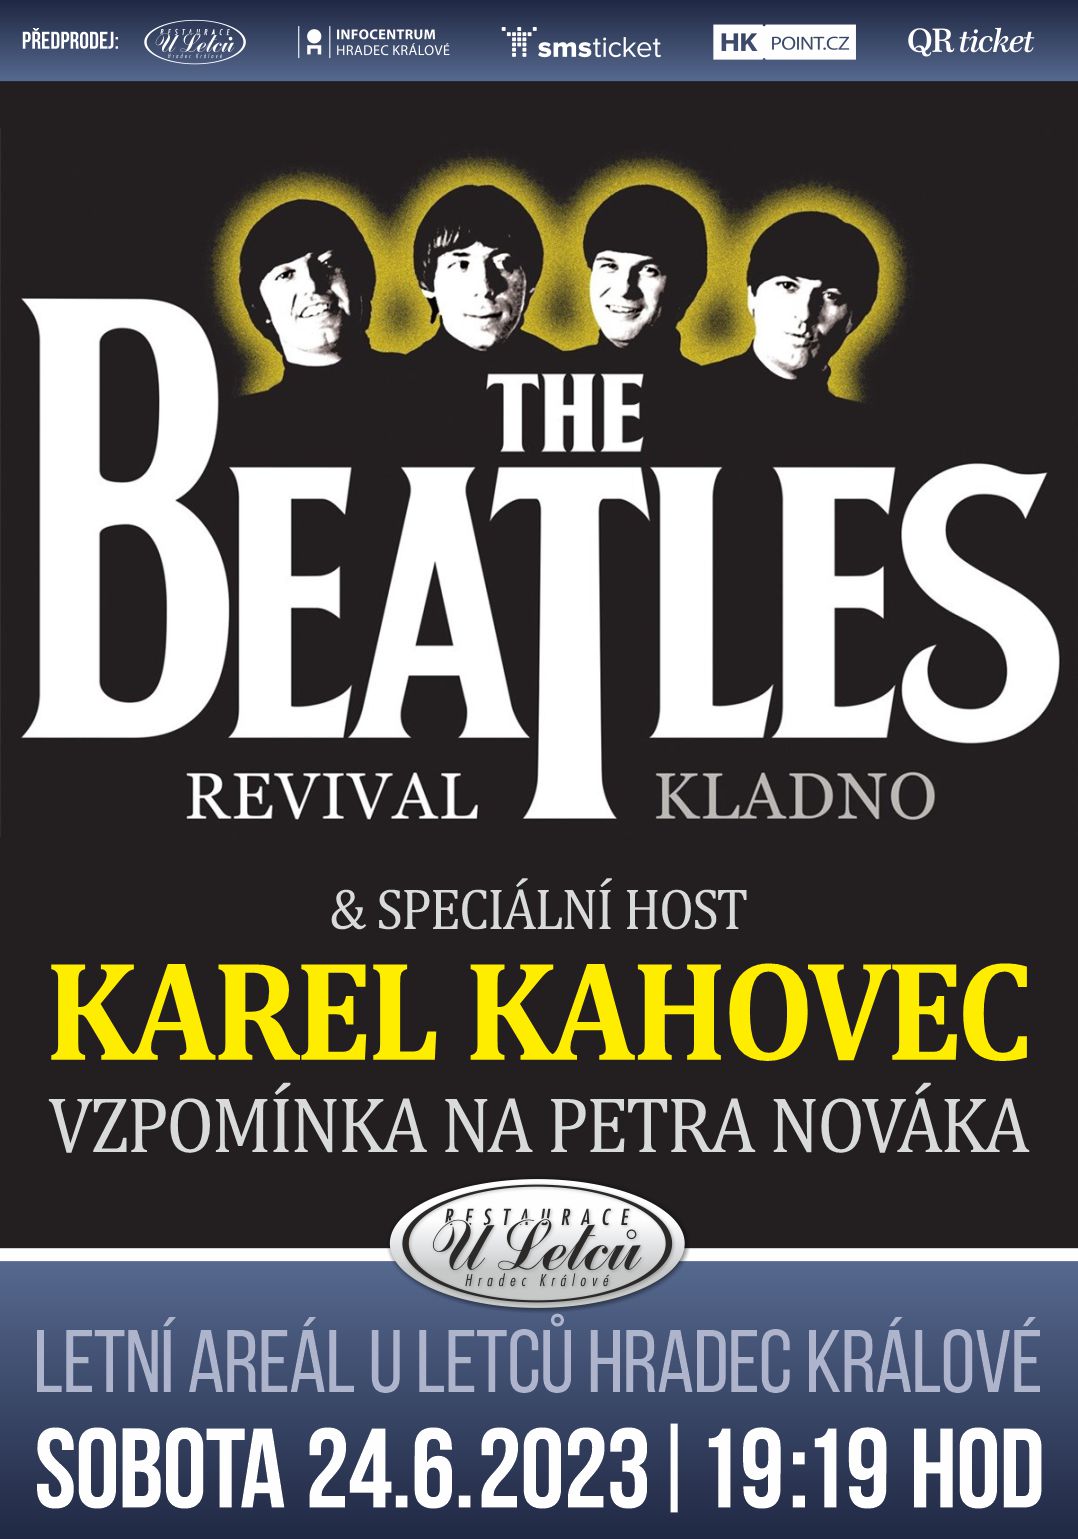 The Beatles revival & Karel Kahovec